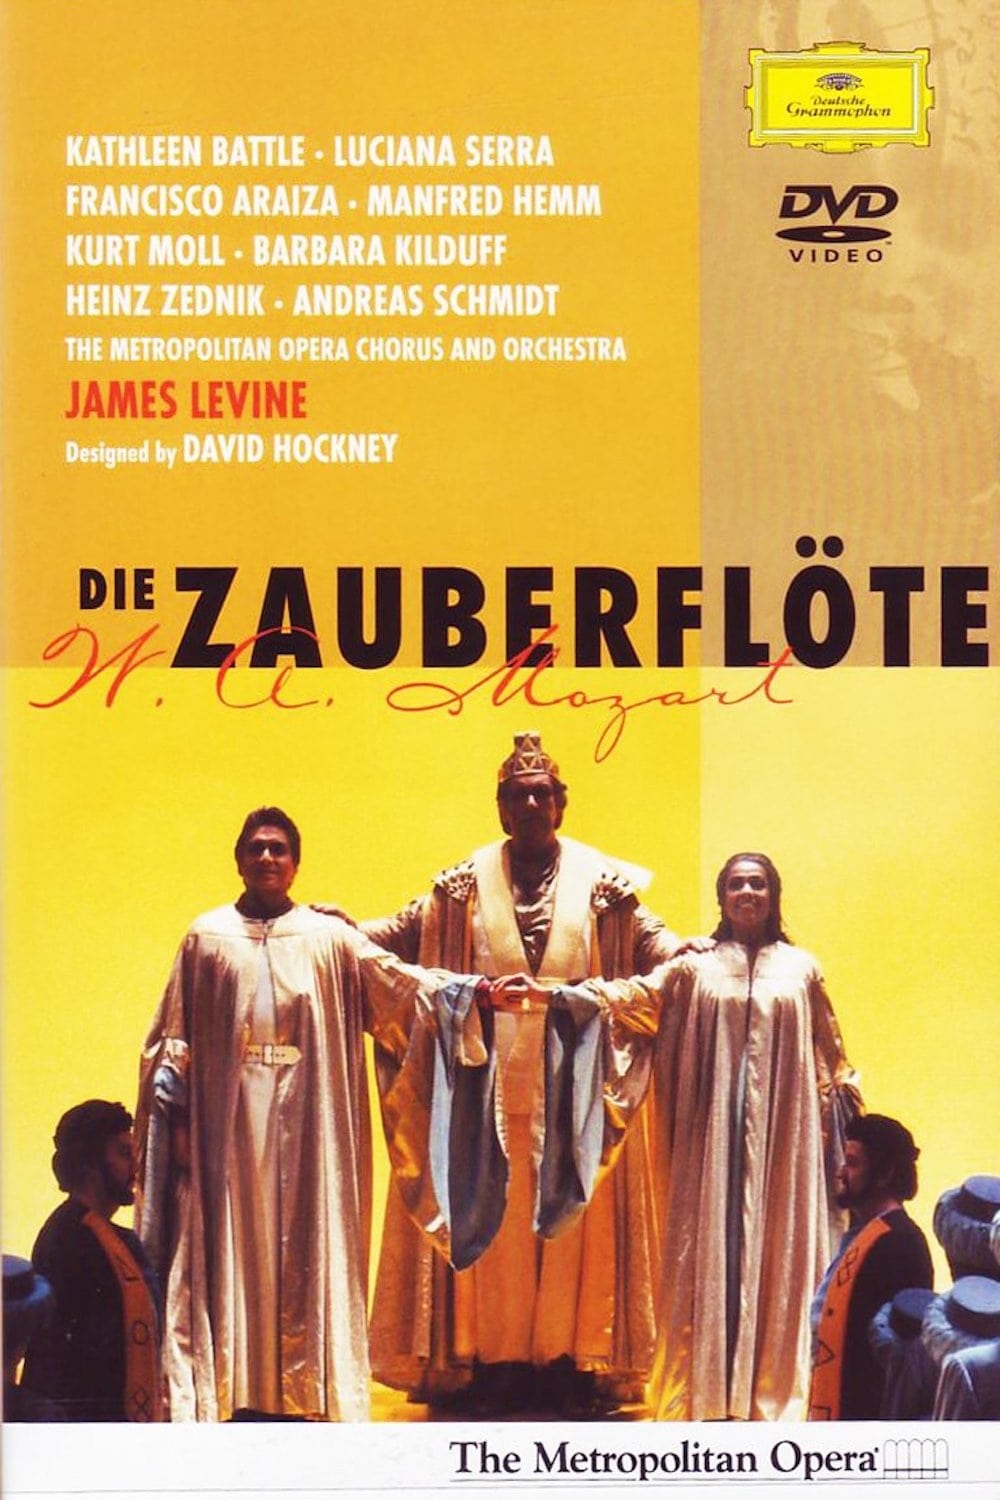 The Metropolitan Opera - Mozart: The Magic Flute (2000)